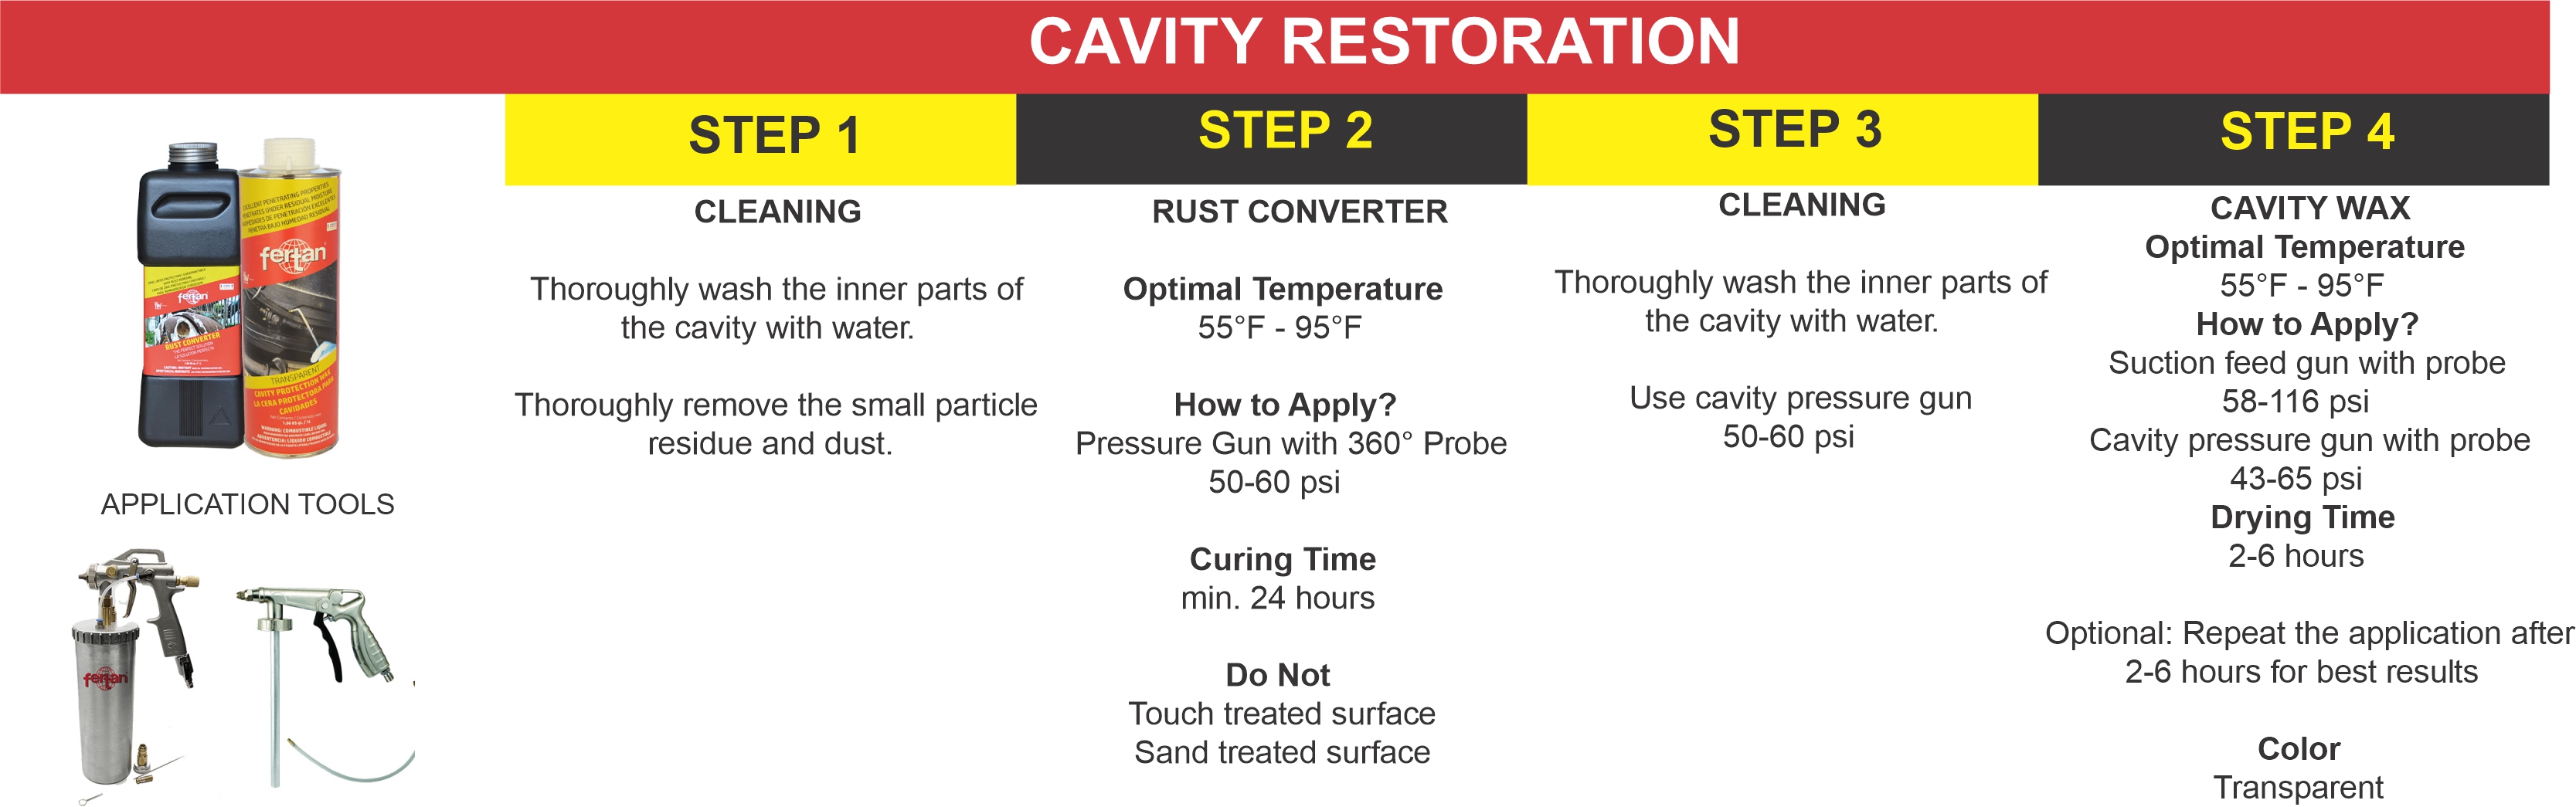 cavity restoration